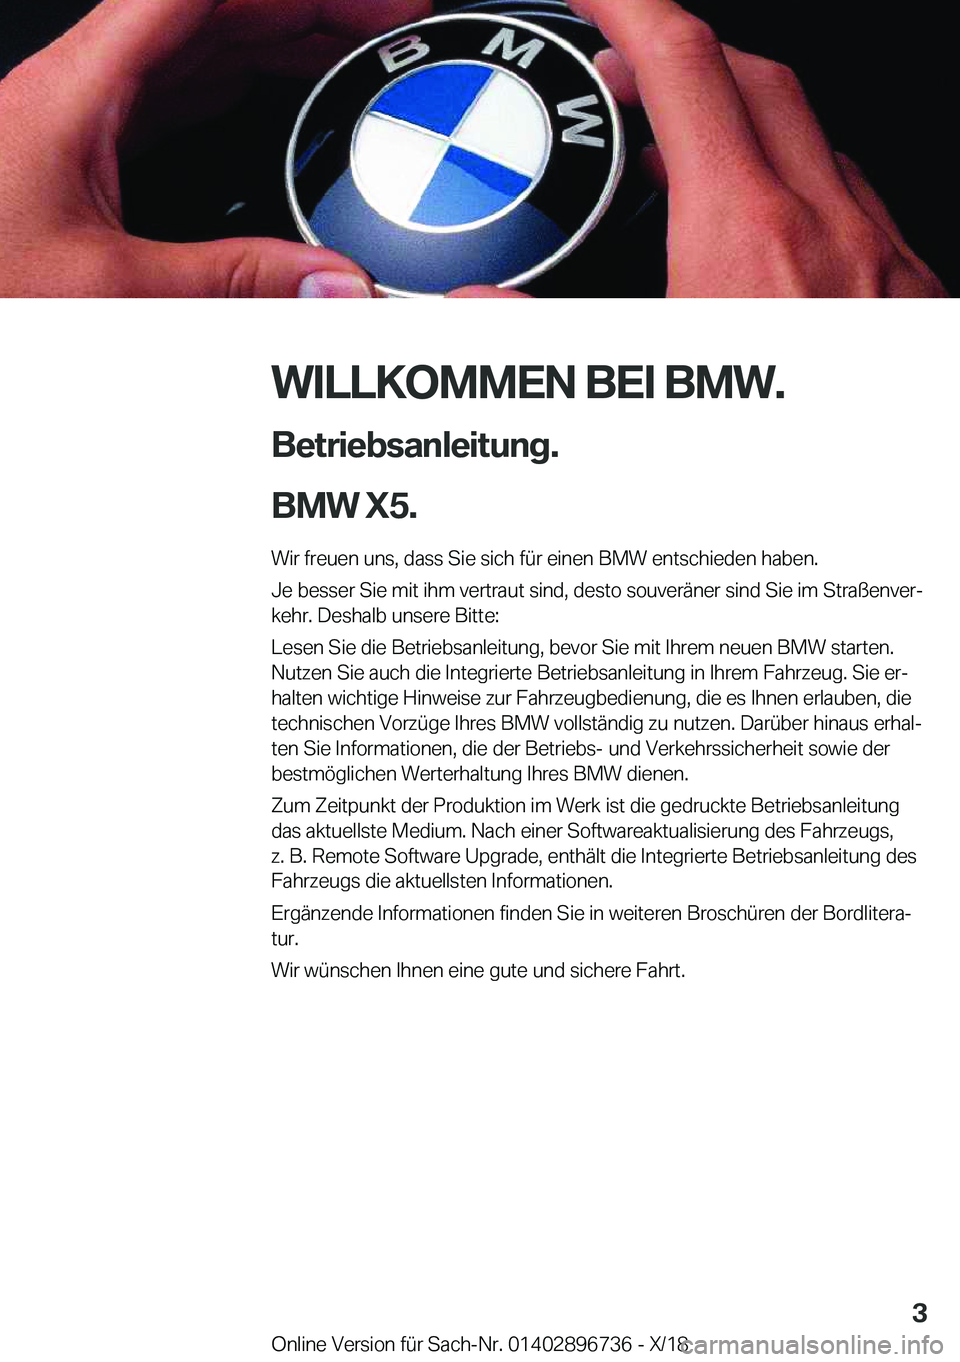 BMW X5 2019  Betriebsanleitungen (in German) �W�I�L�L�K�O�M�M�E�N��B�E�I��B�M�W�.�B�e�t�r�i�e�b�s�a�n�l�e�i�t�u�n�g�.
�B�M�W��X�5�. �W�i�r��f�r�e�u�e�n��u�n�s�,��d�a�s�s��S�i�e��s�i�c�h��f�